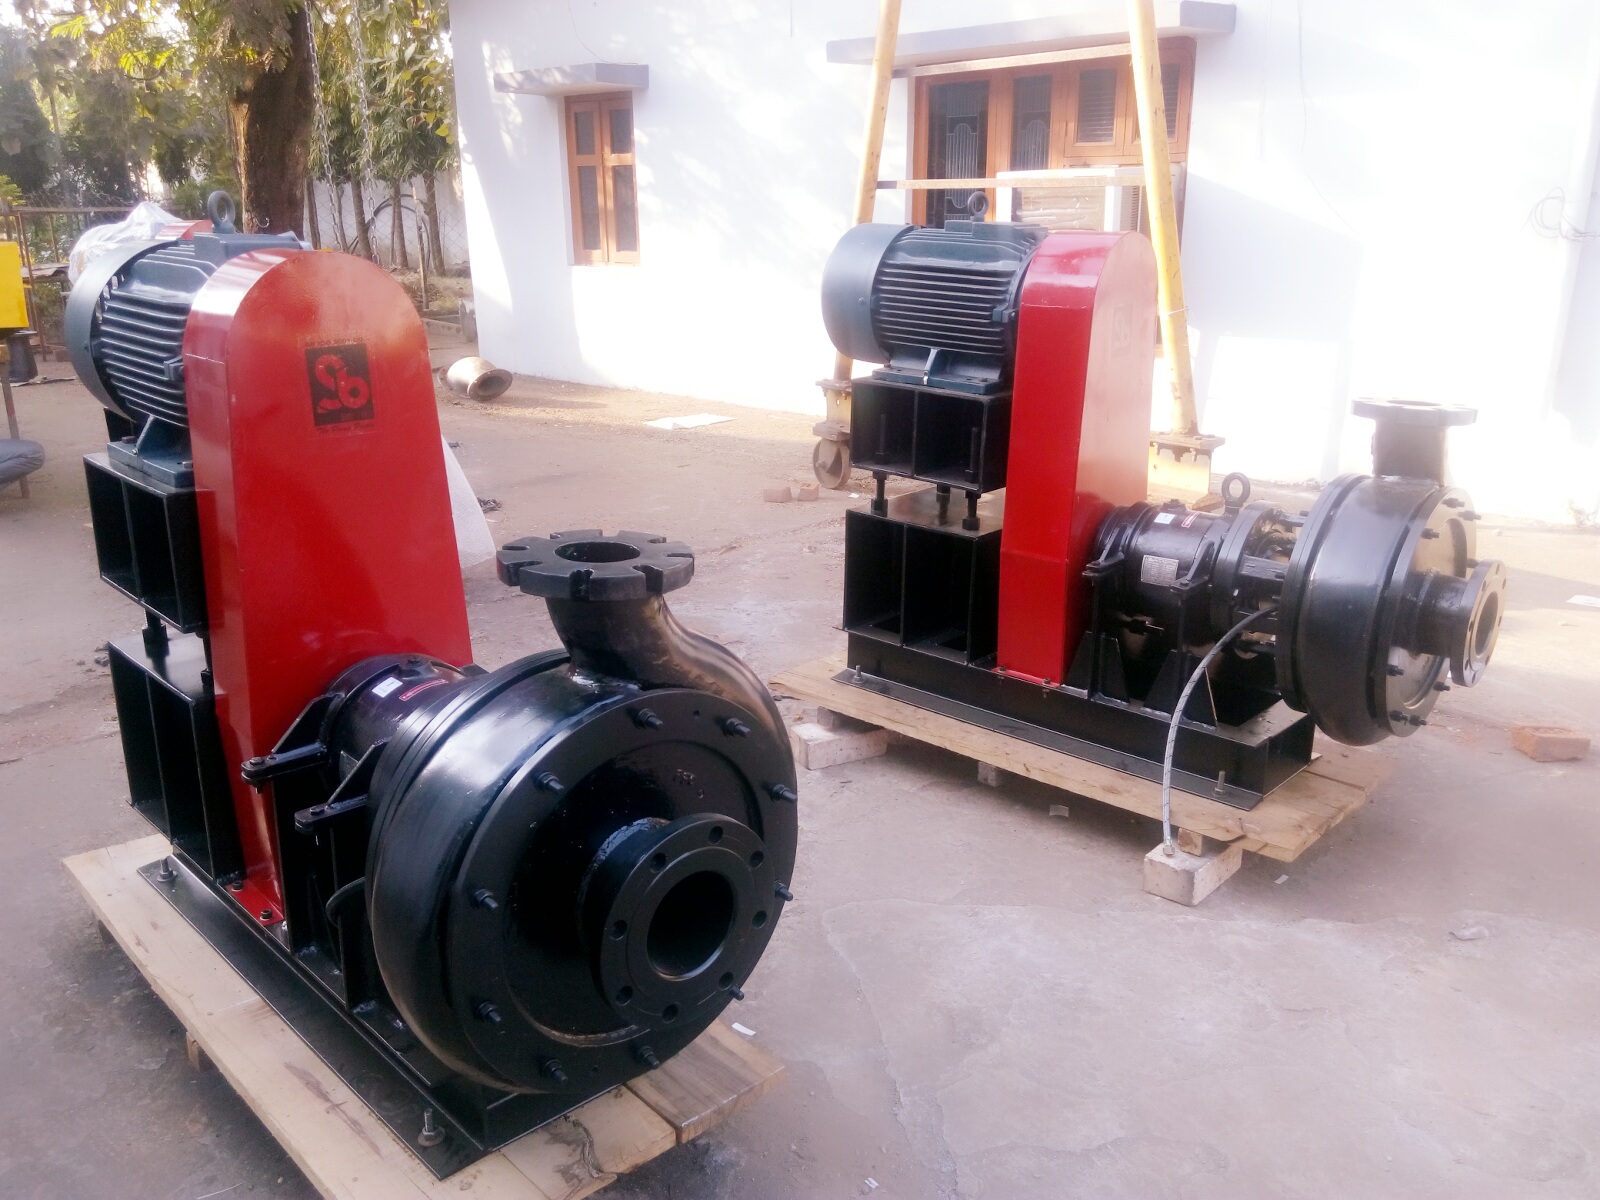 Horizontal Slurry Pump  | S B Pumps India | Slurry Pumps In India, Slurry pumps manufacturer in India, best slurry pump supplier in India, Slurry pumps manufacturing company in India, Slurry pump dealer in Madhya Pradesh, Slurry pump mfgr India - GL33325